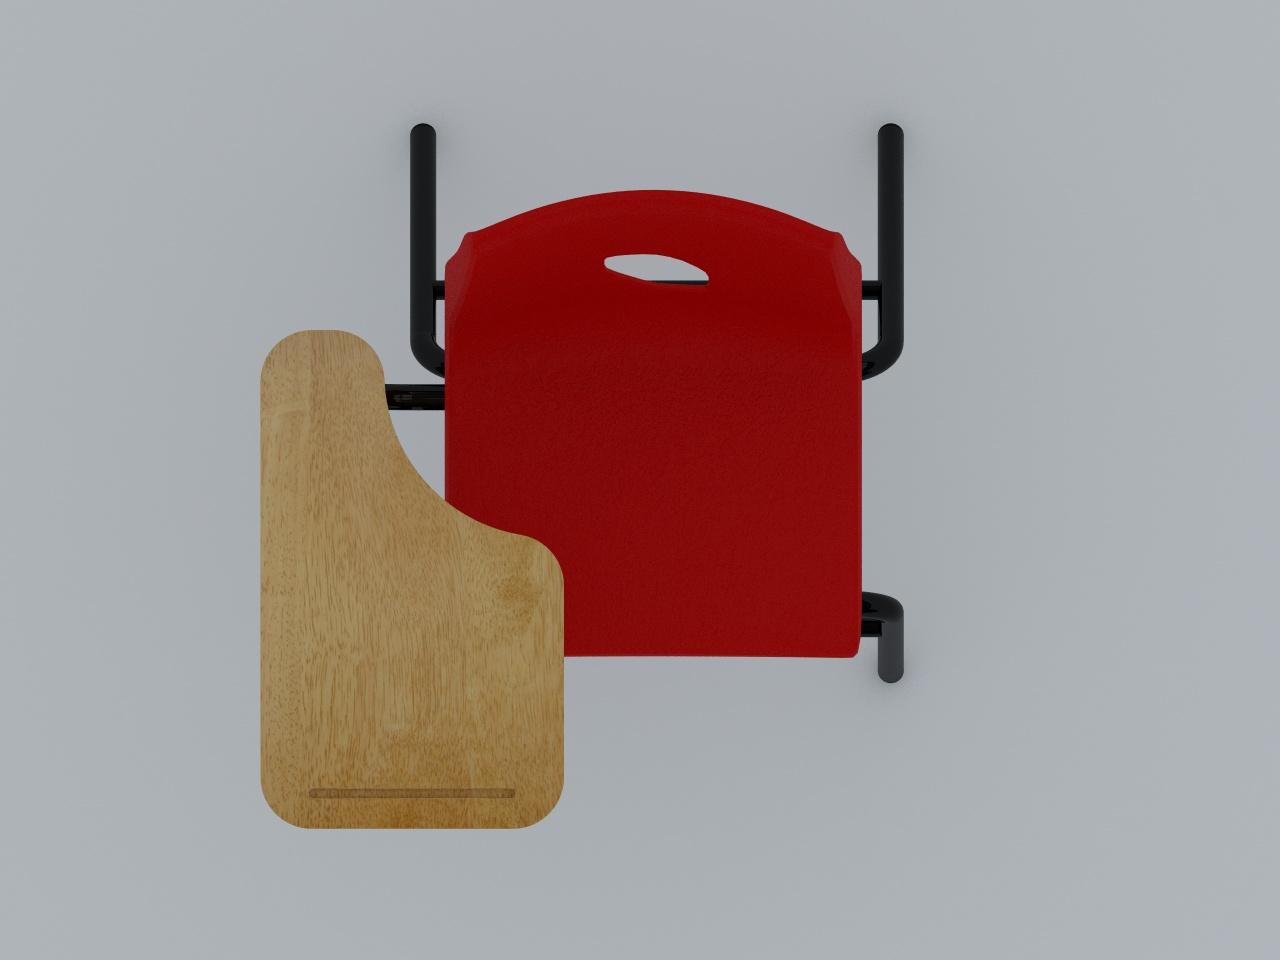 silla de paleta concha plastica color rojo paleta de triplay